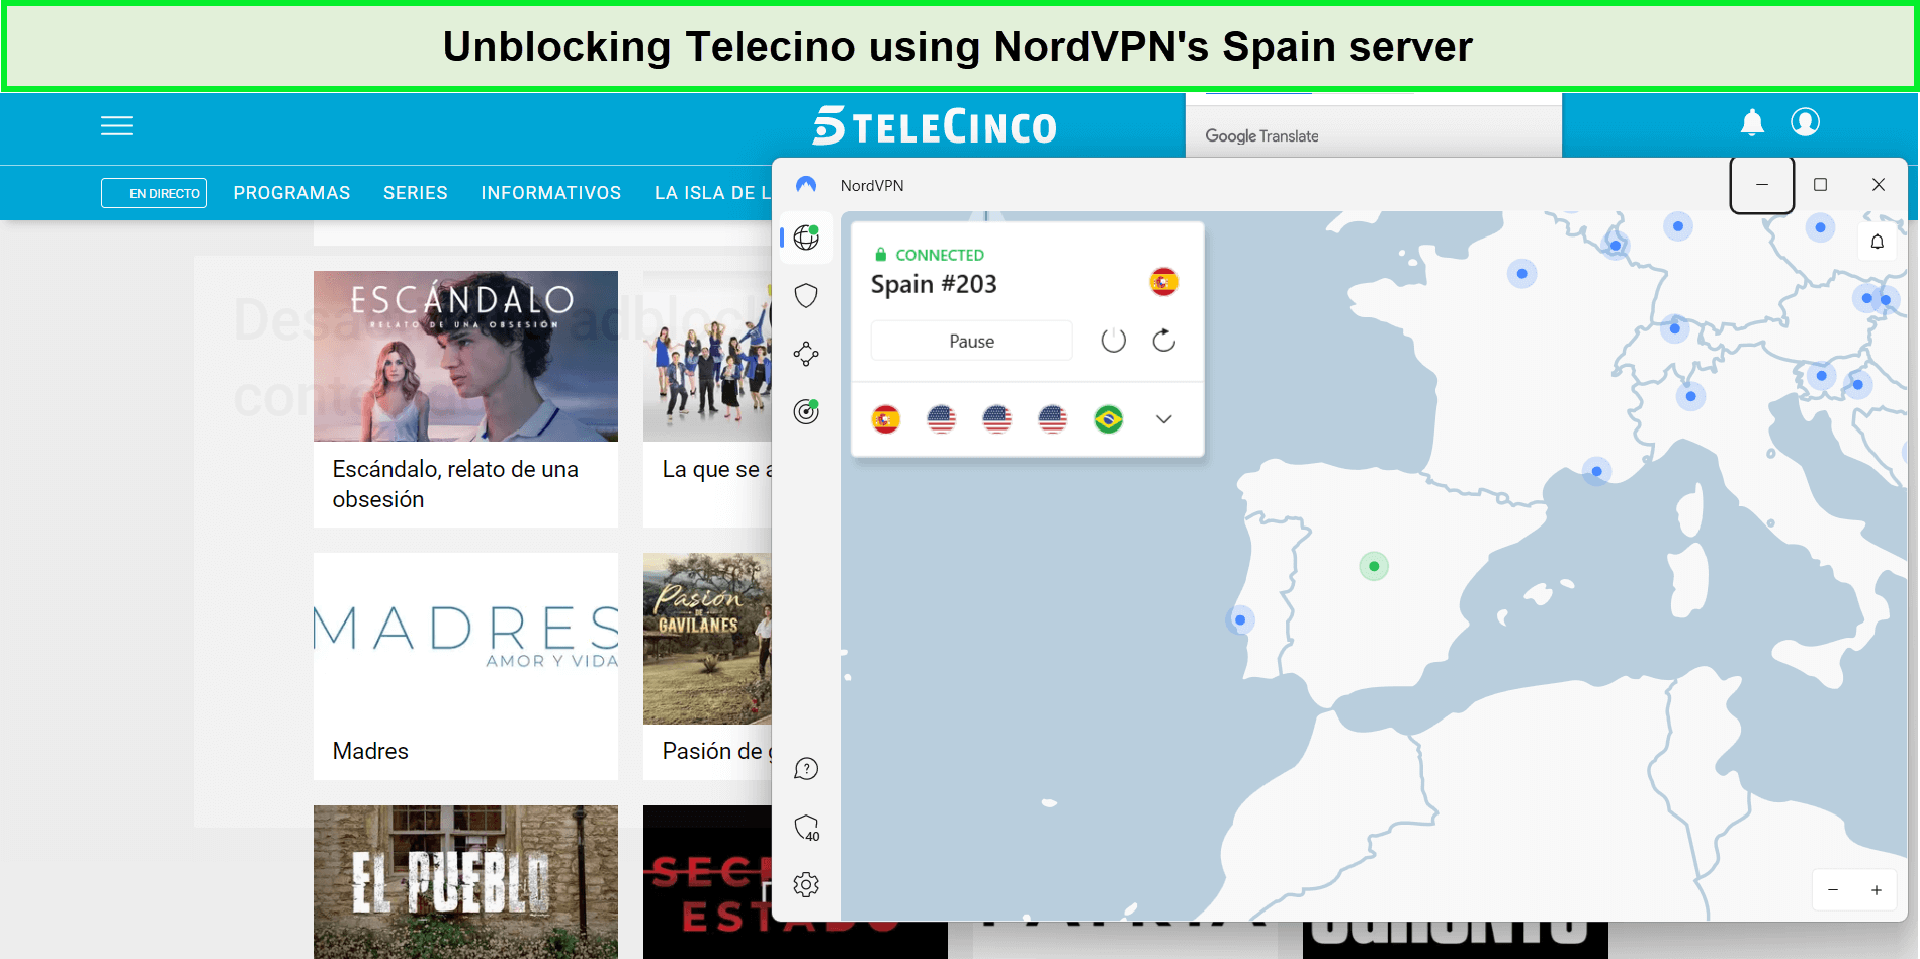 nordvpn-unblocked-telecinco-with-spanish-server-in-France